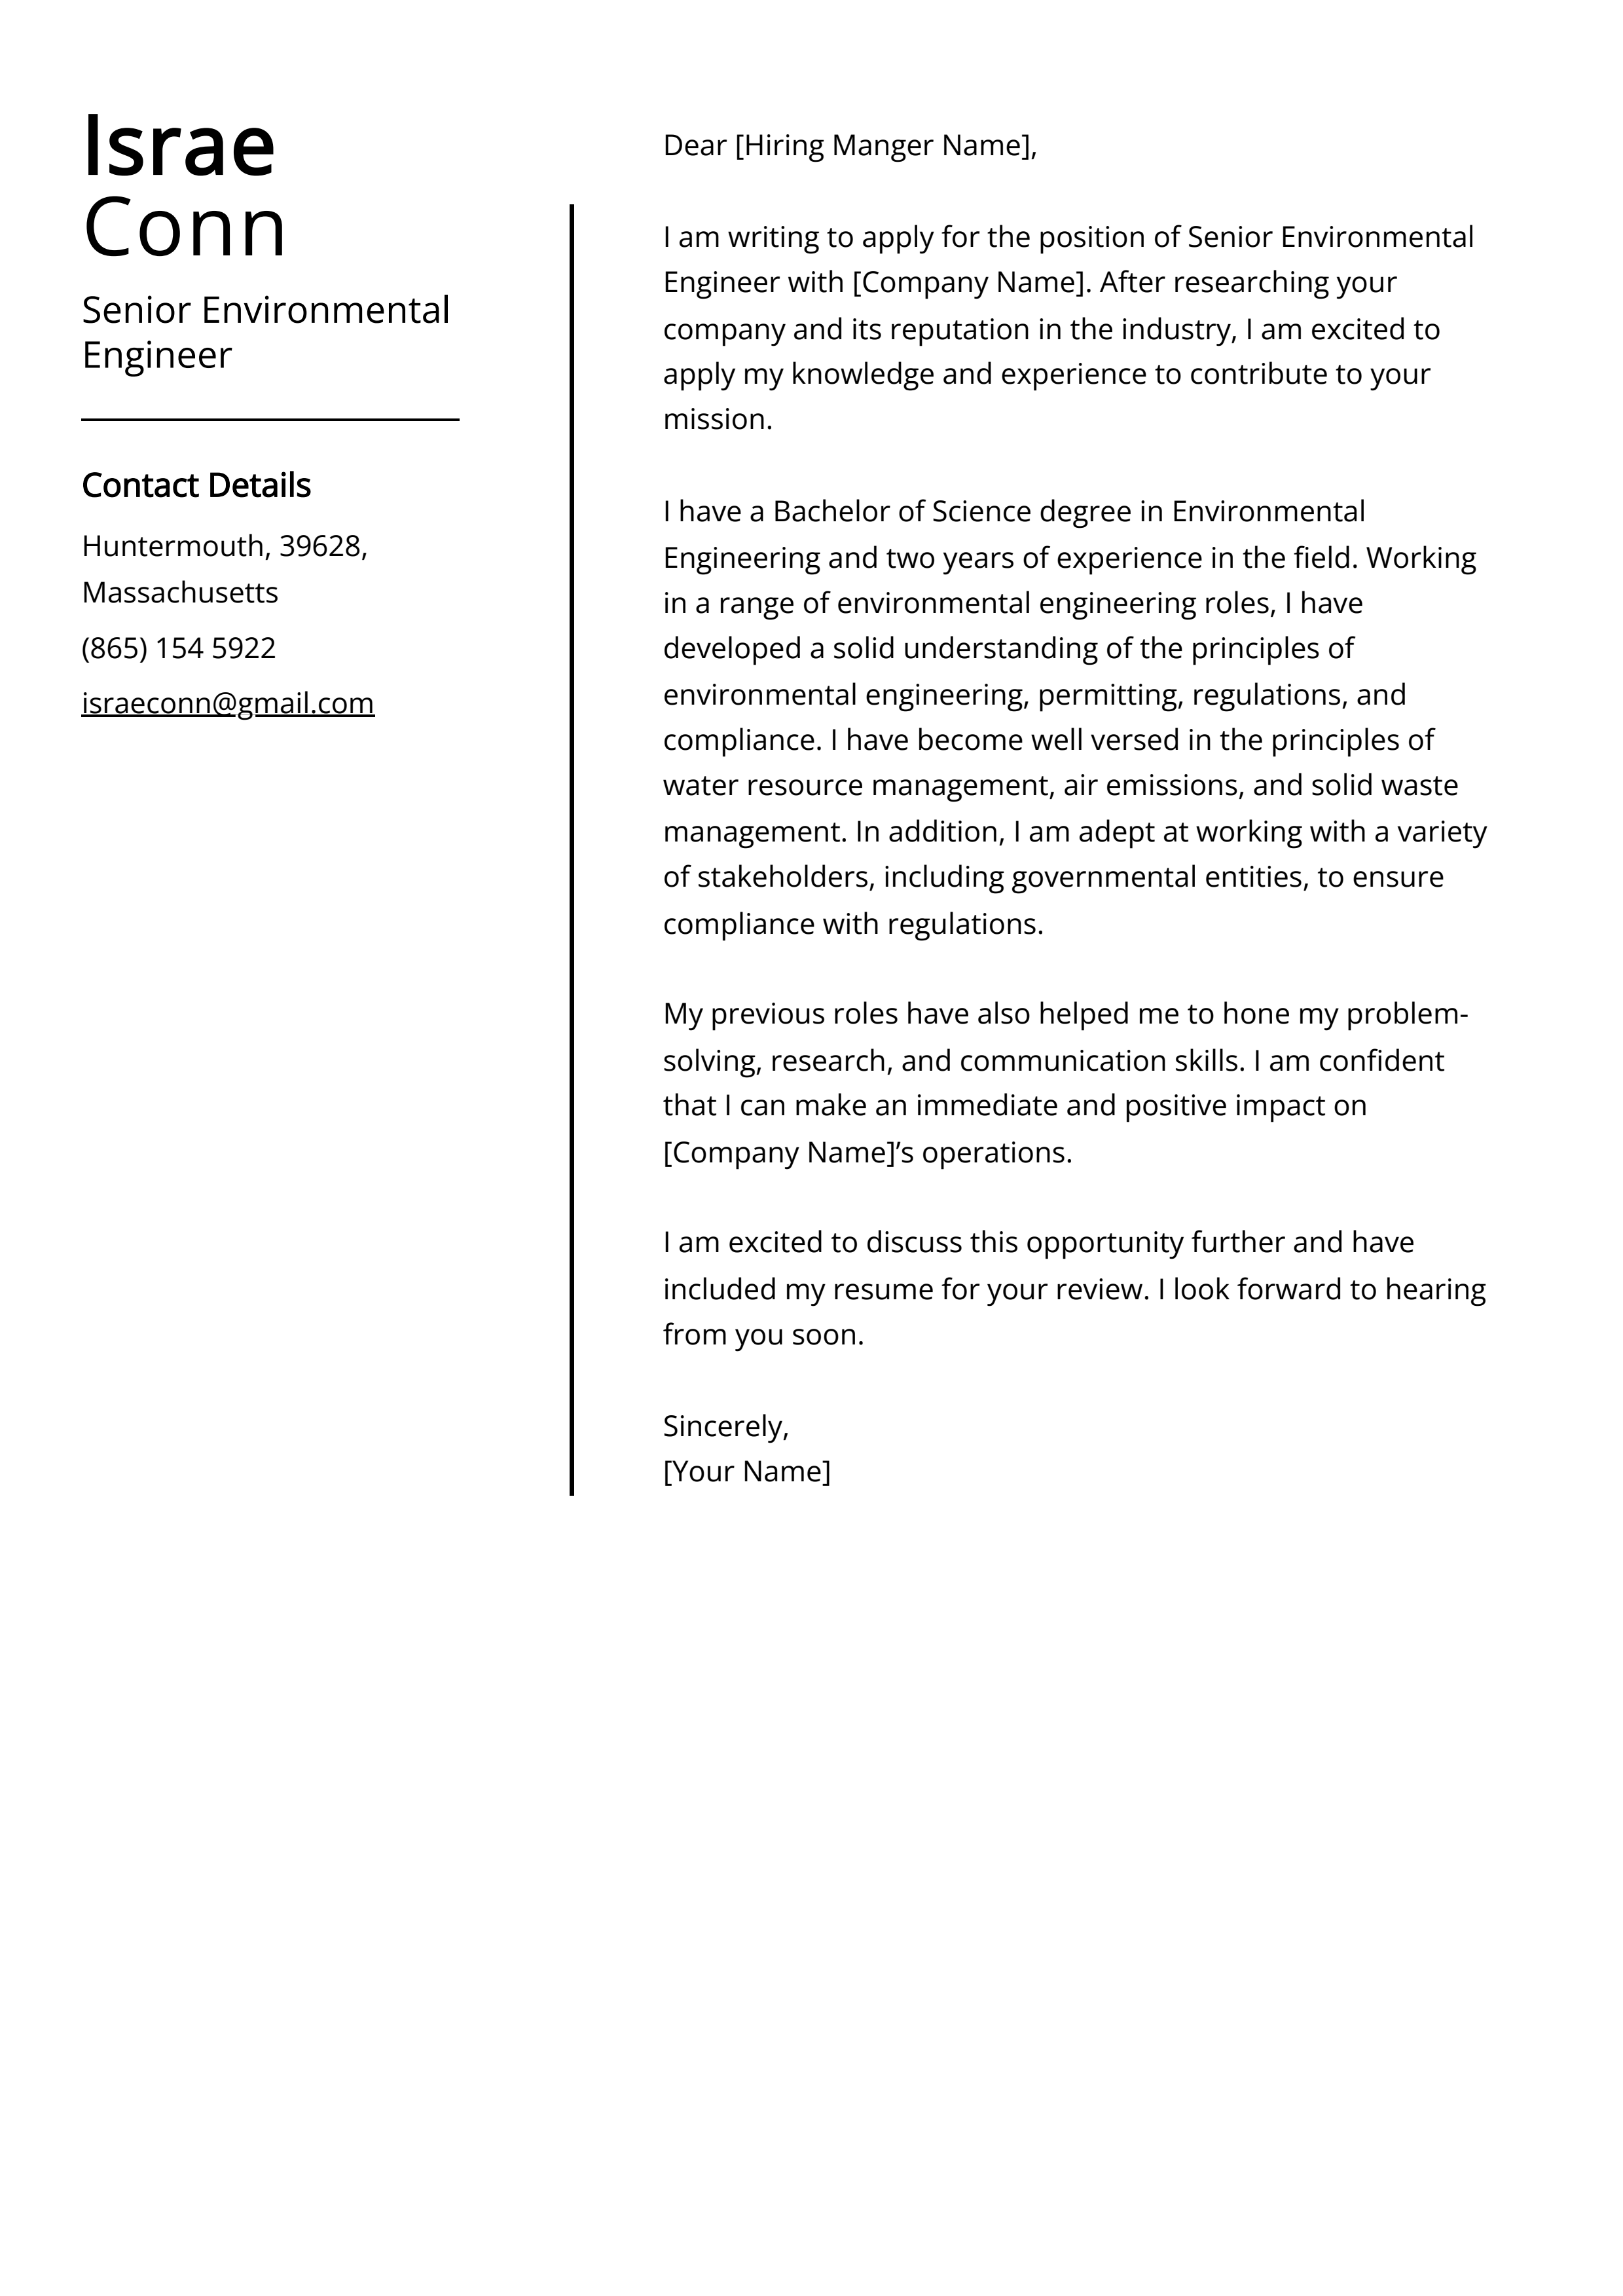 Senior Environmental Engineer Cover Letter Example